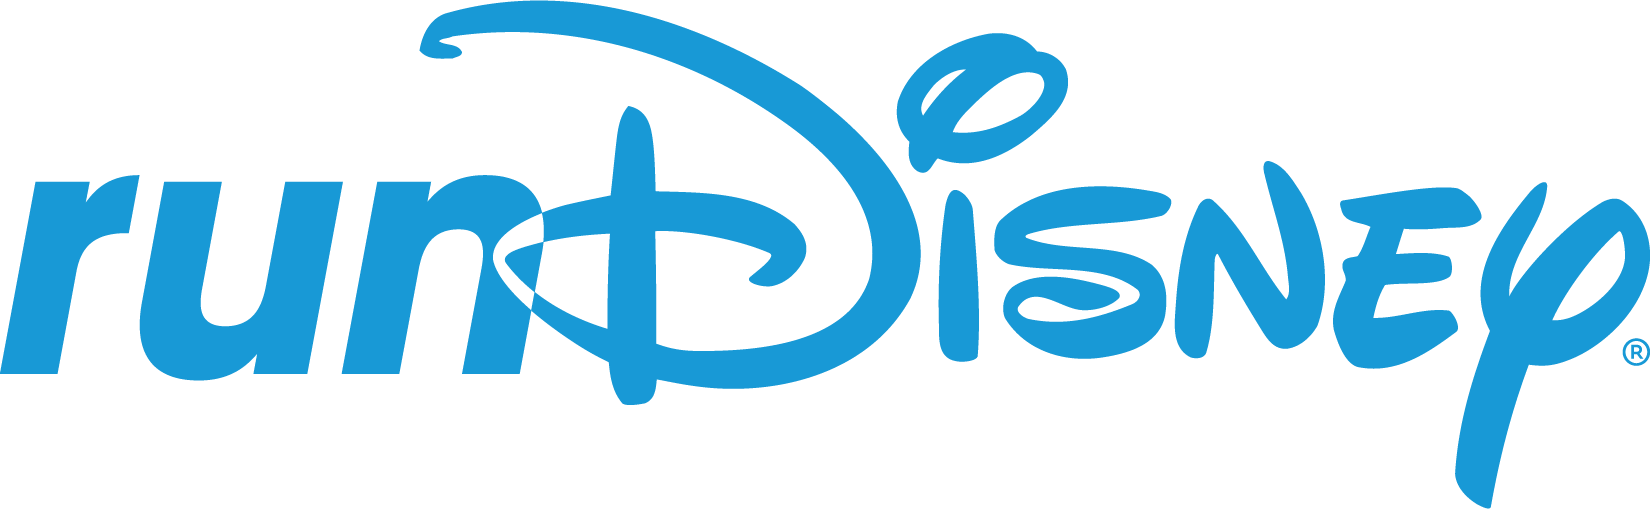 Run Disney Logo